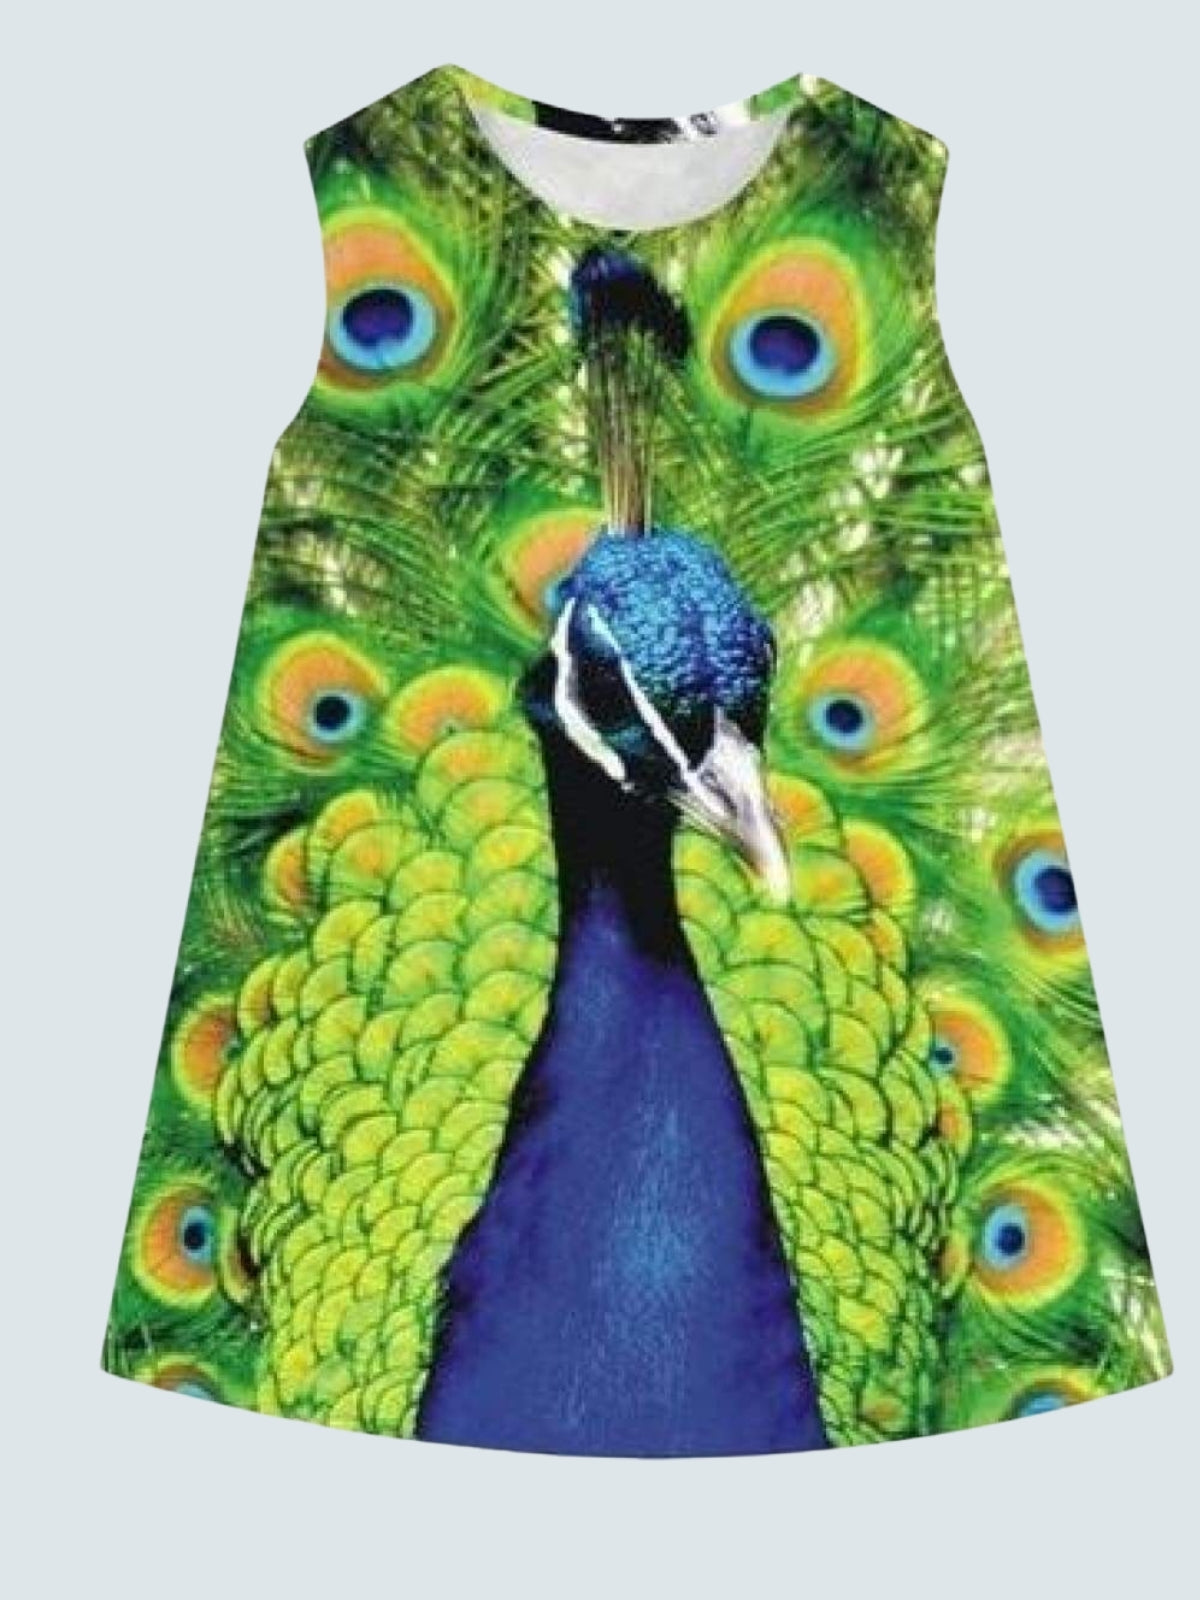 Girls Peacock Printed Sleeveless Dress - Green/blue / 8T - Girls Casual Spring Dresses